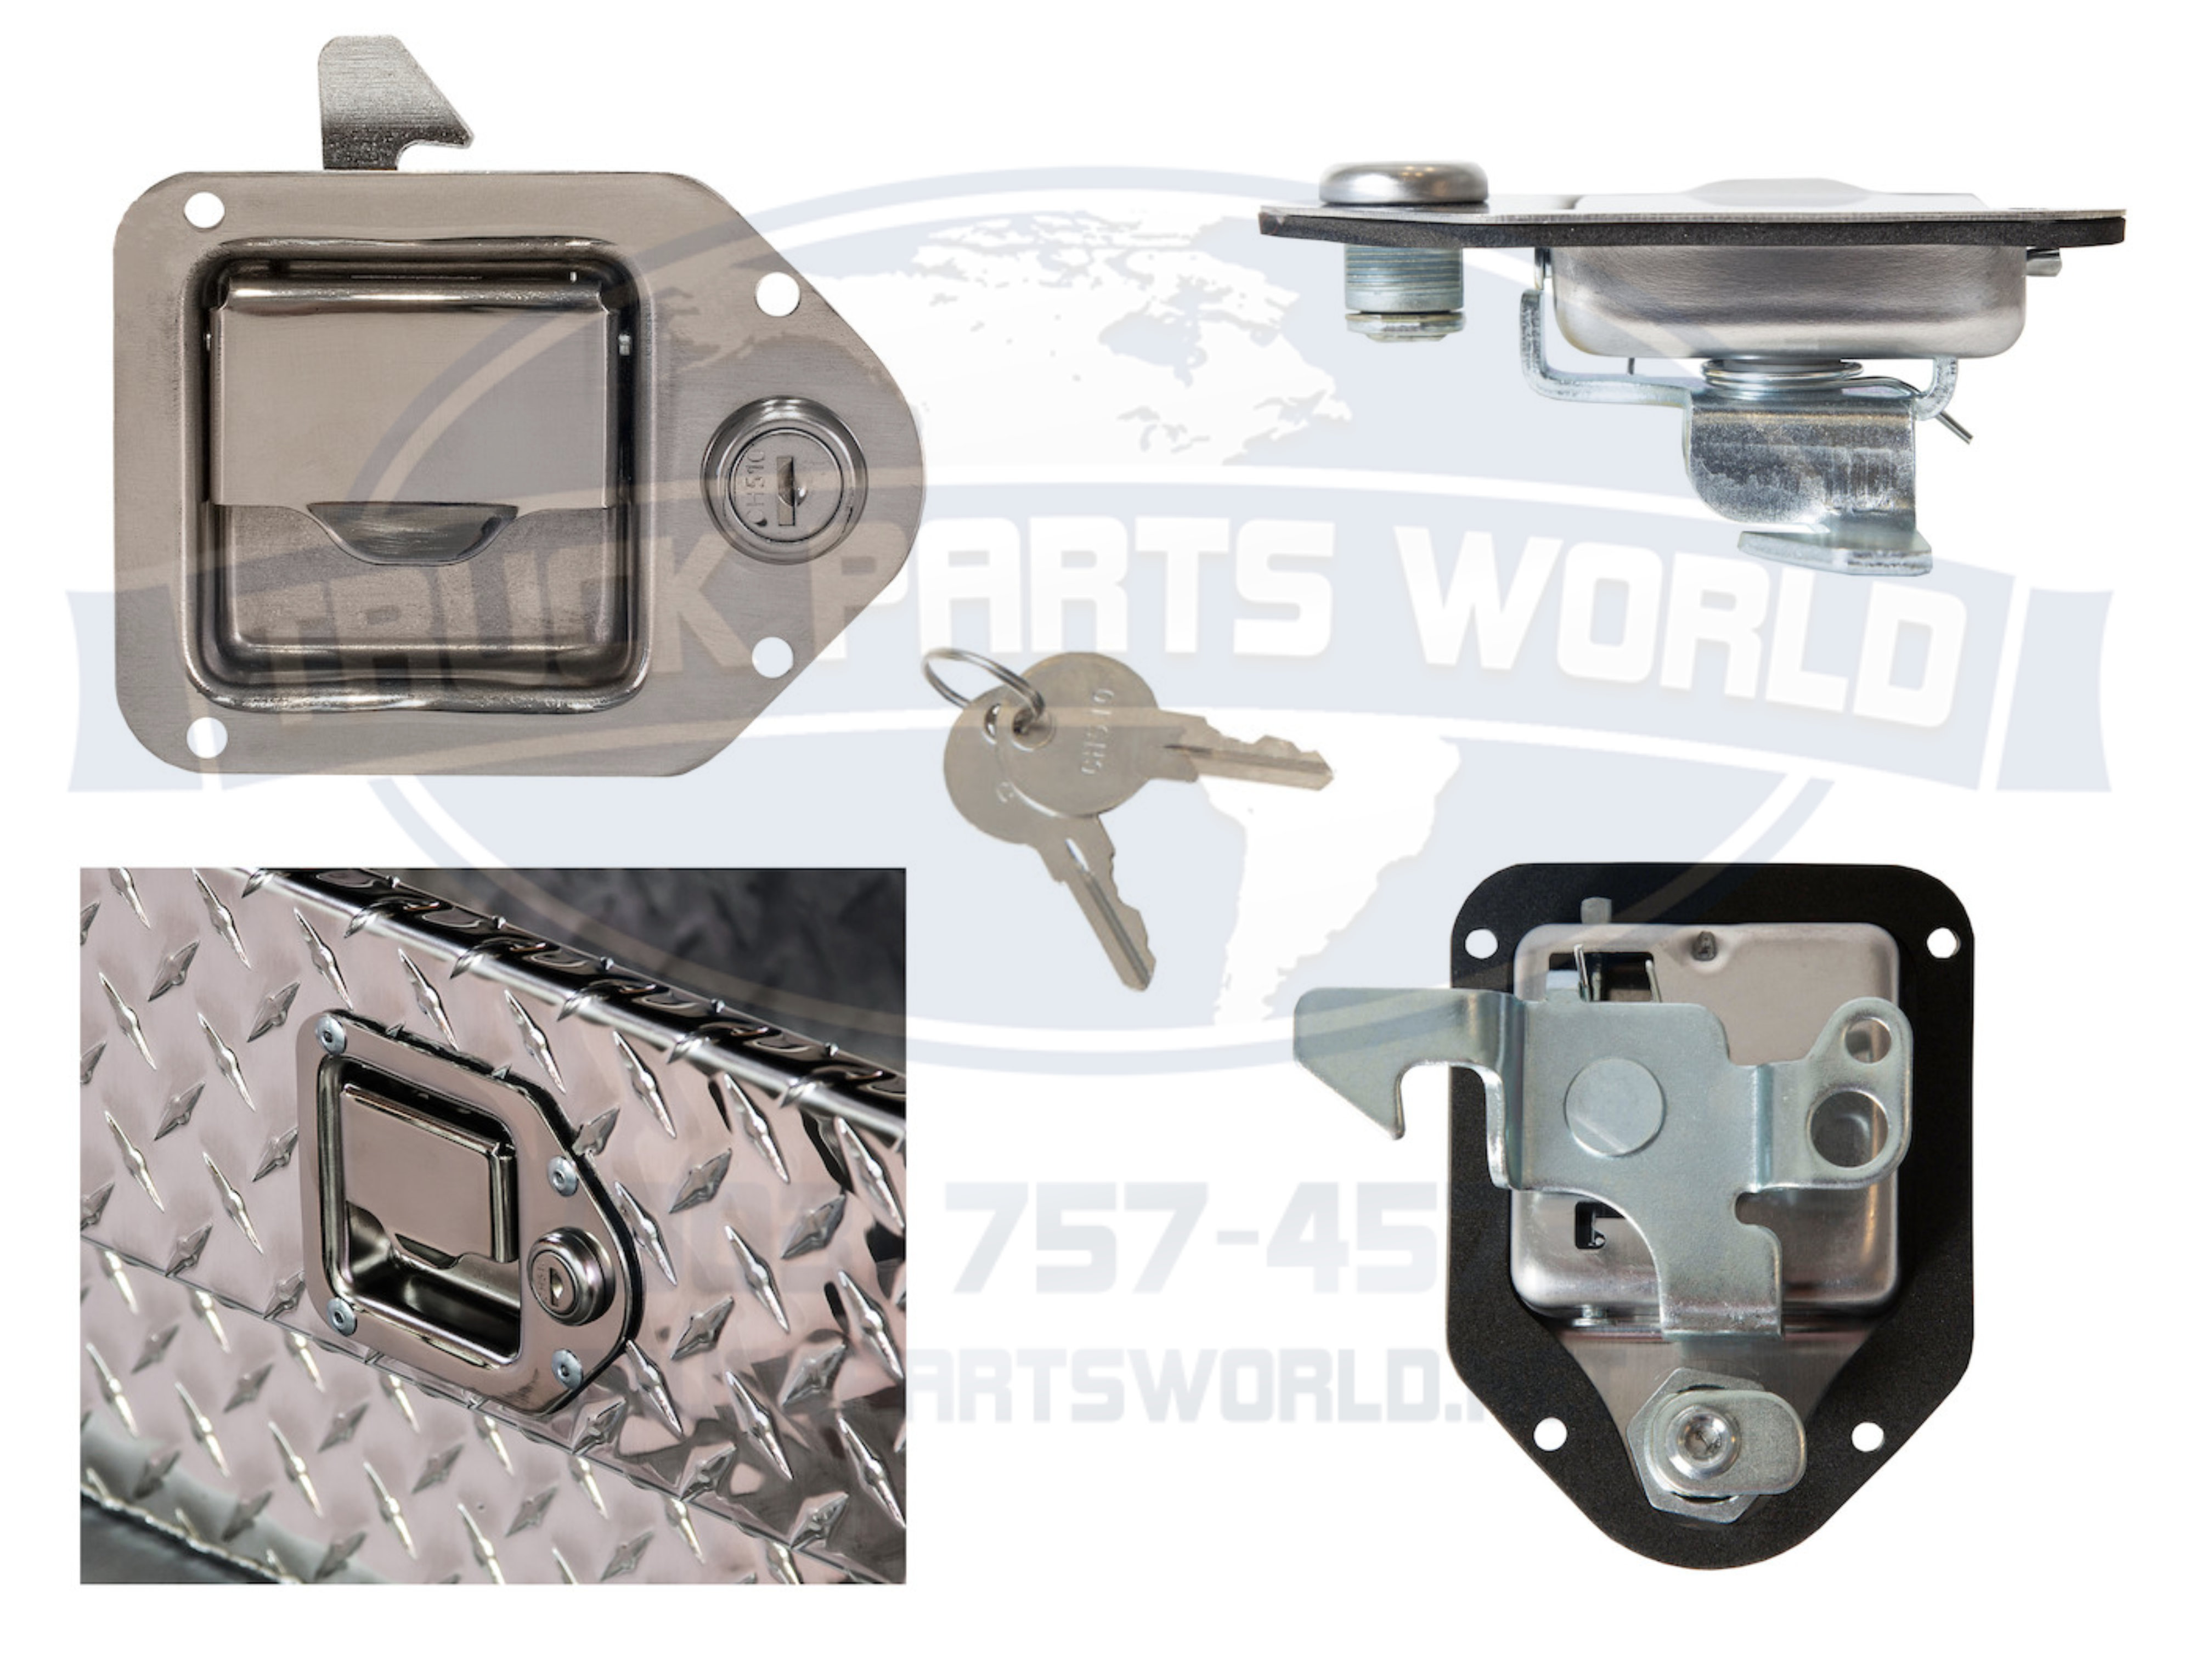 2x Marine Paddle Latch Truck Tool Box Doors Lock Latch with Key RV Paddle 